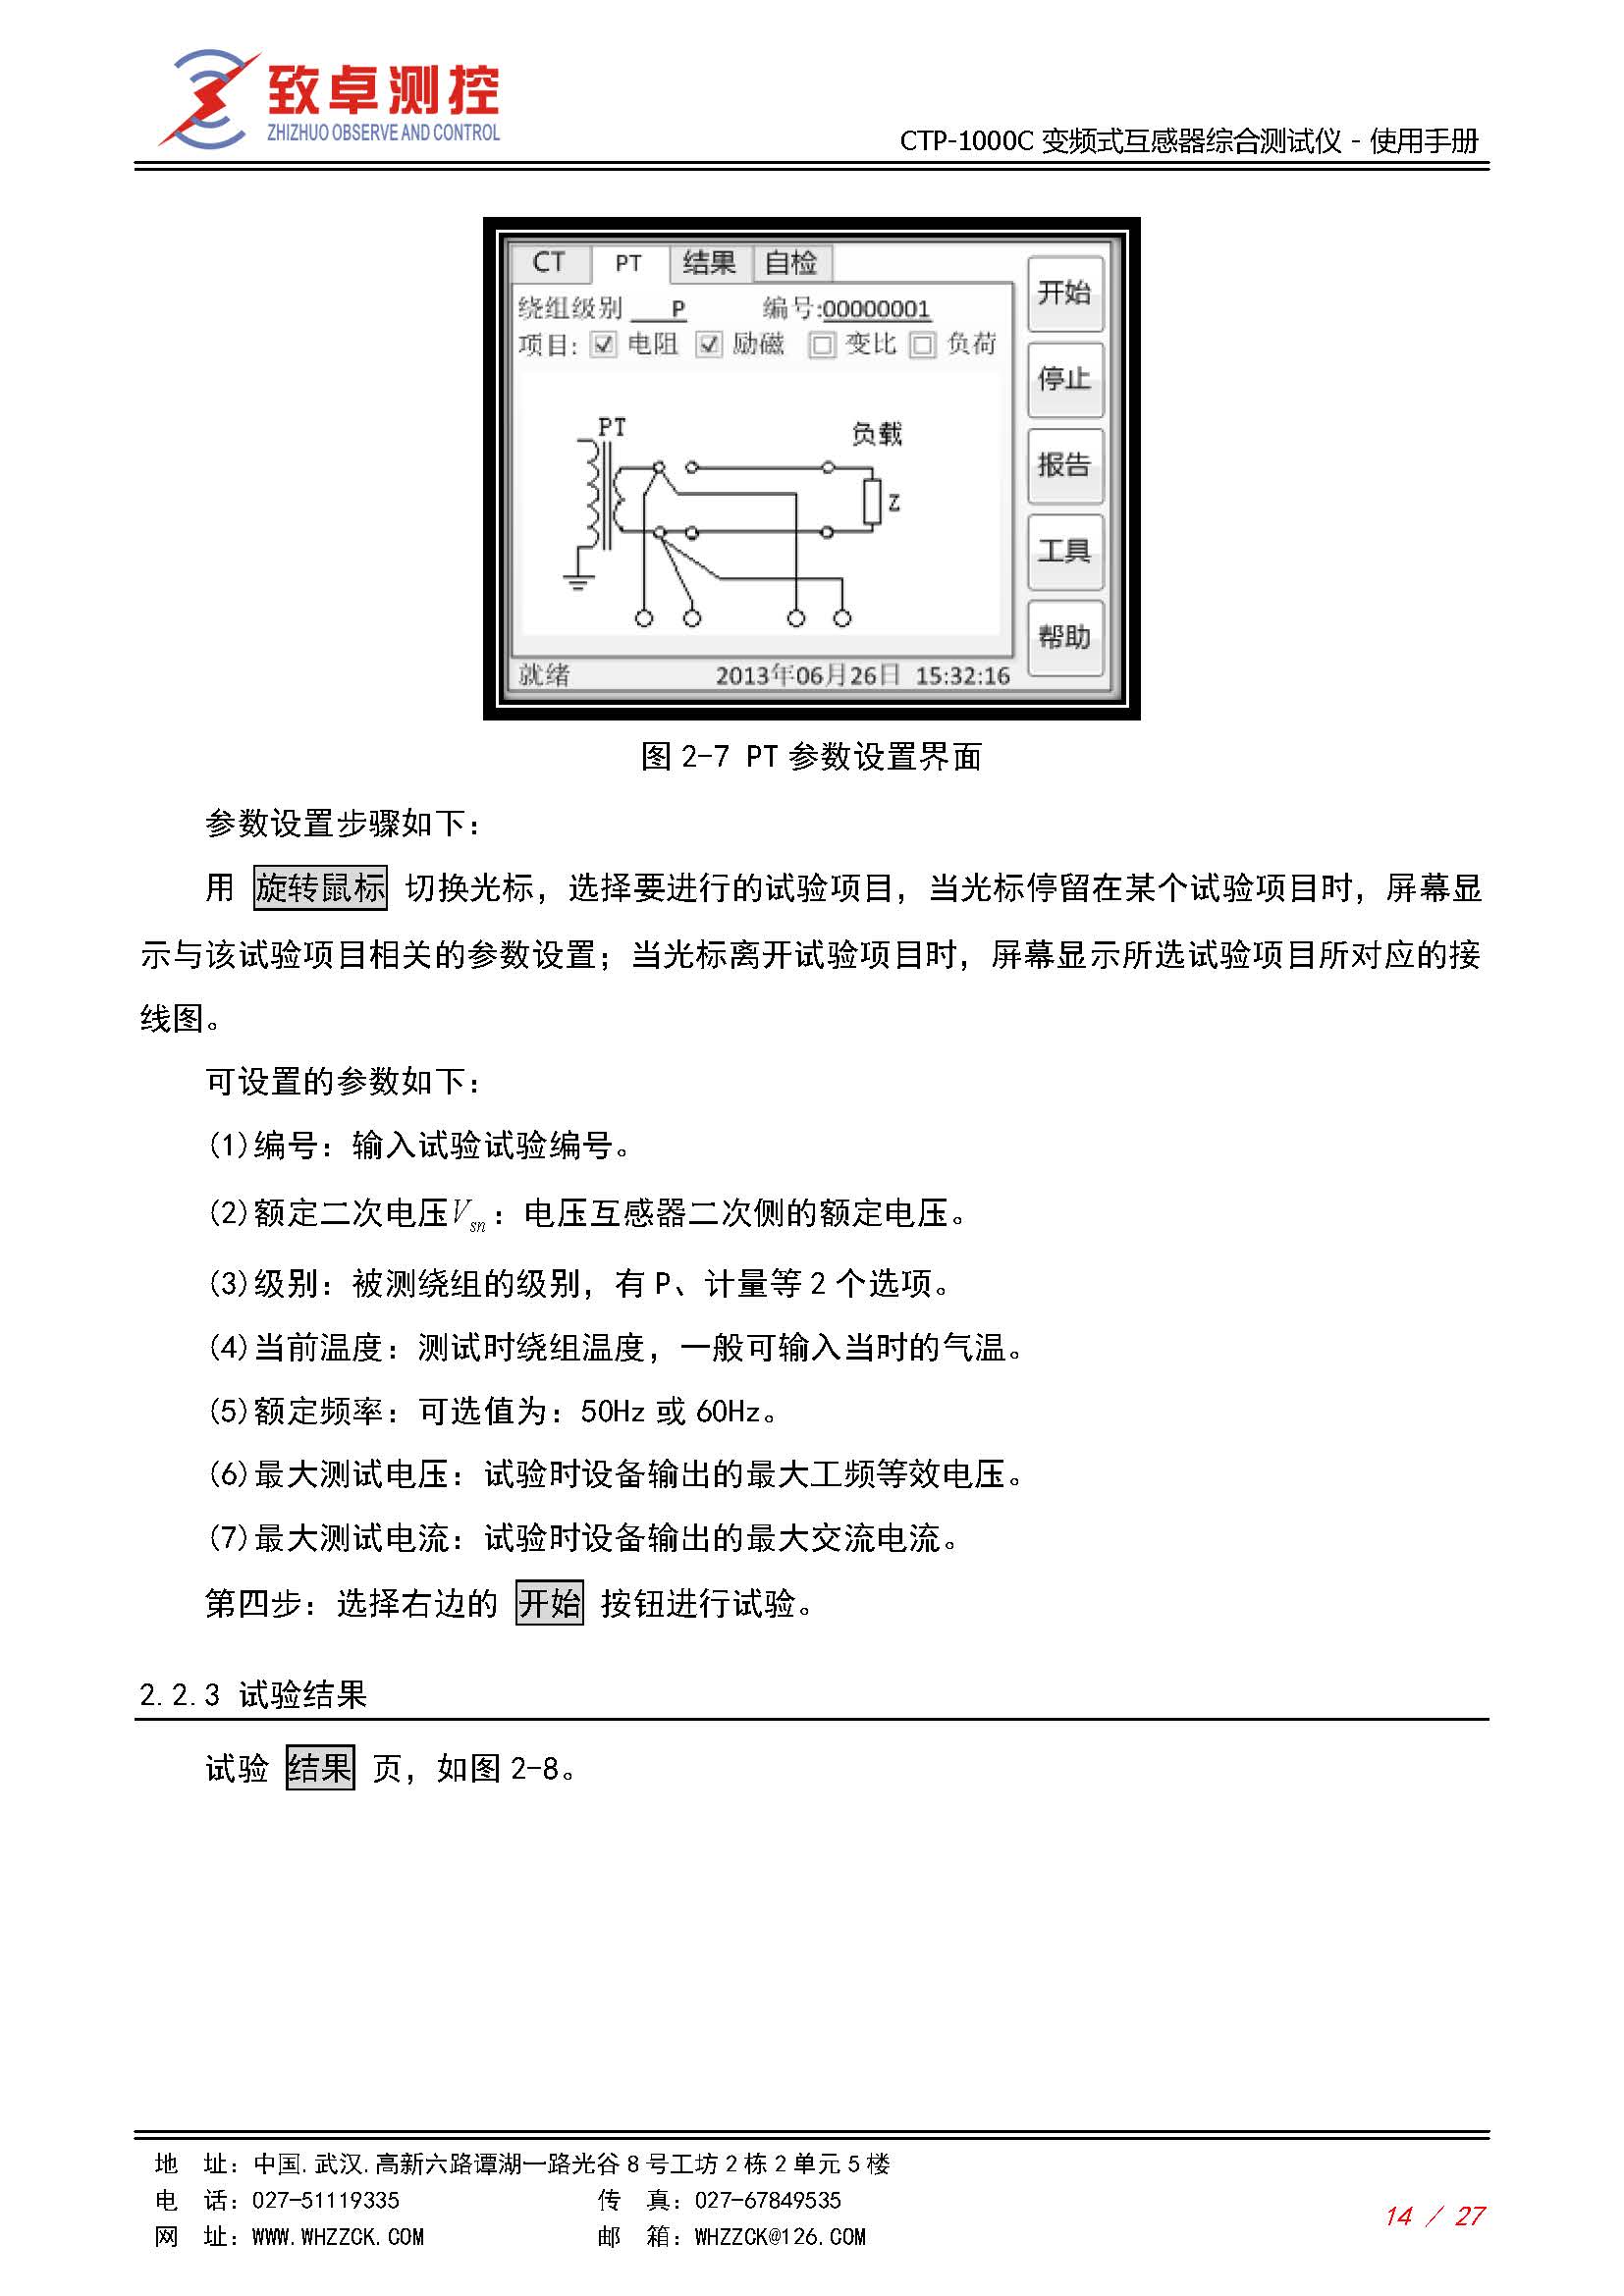 CTP-1000C 变频式互感器综合测试仪使用说明书(图14)